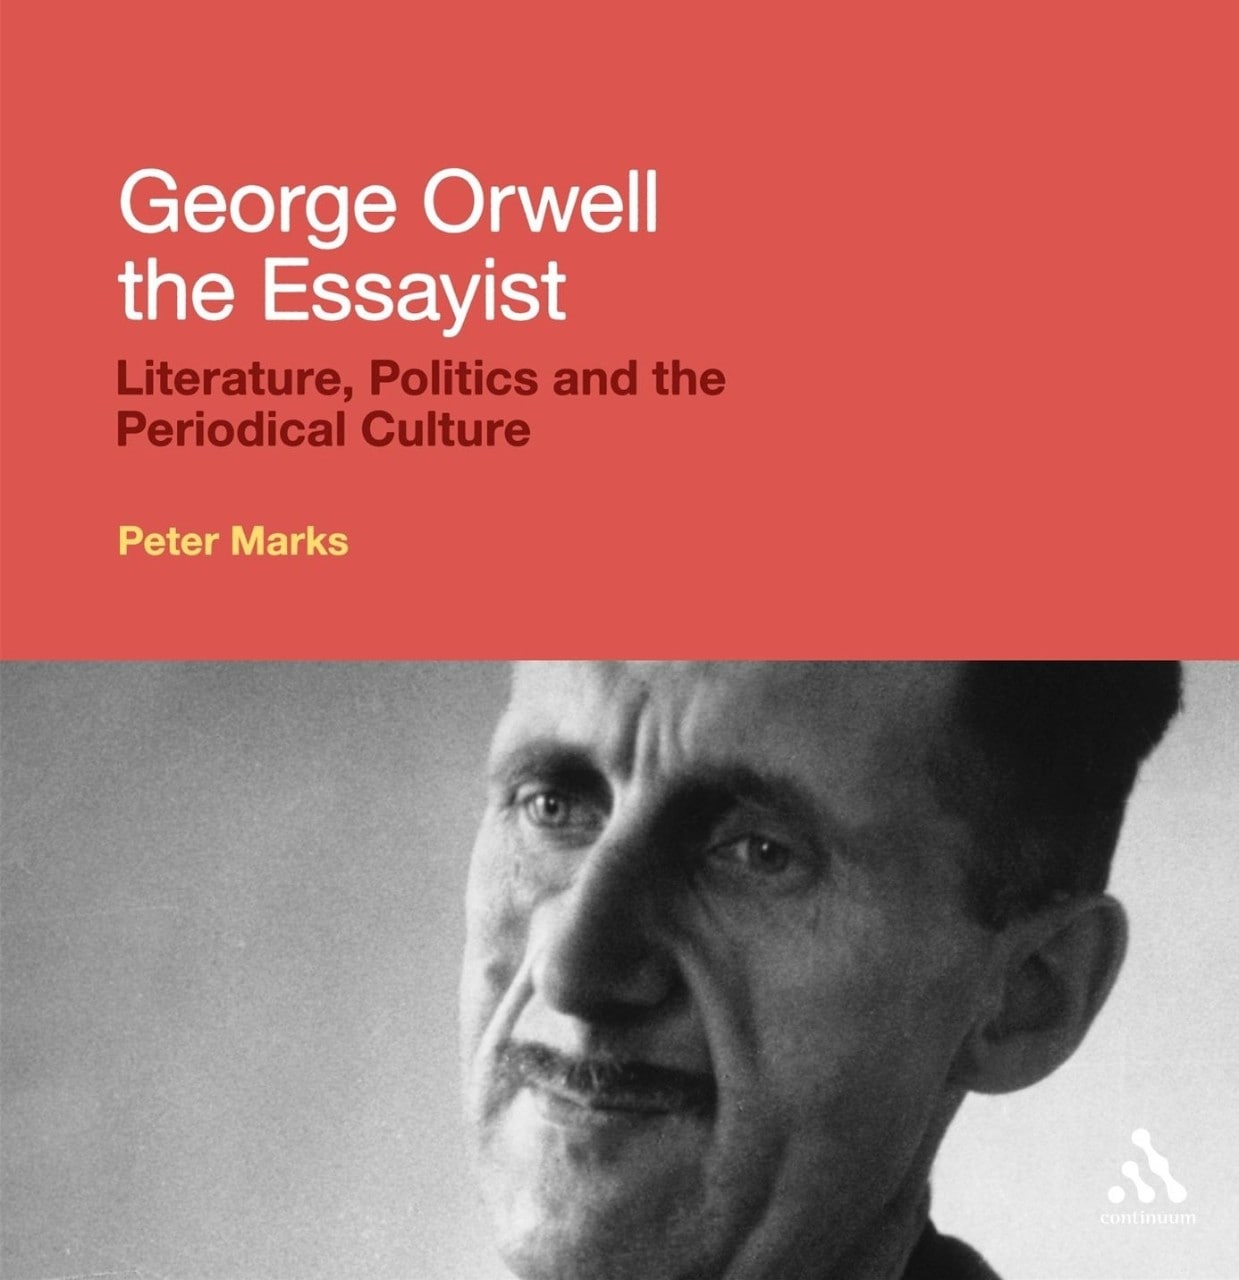 George Orwell the Essayist: Literature, Politics and the Periodical Culture (Continuum)